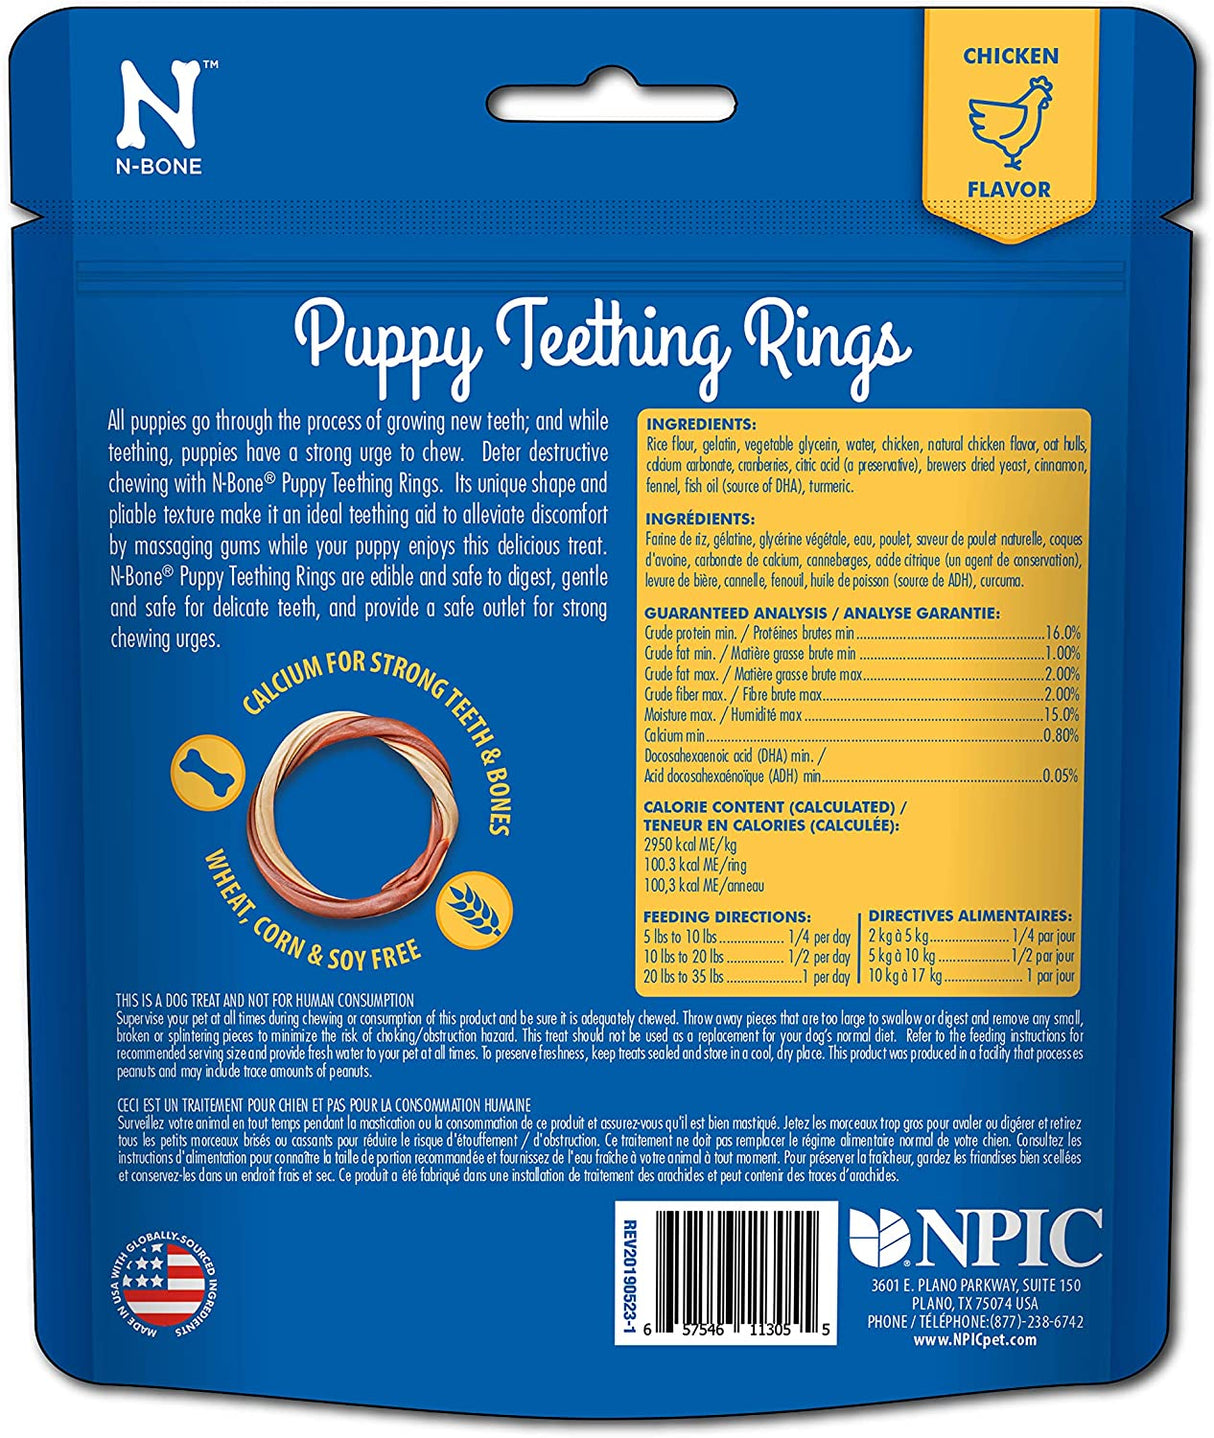 36 count (12 x 3 ct) N-Bone Puppy Teething Ring Chicken Flavor